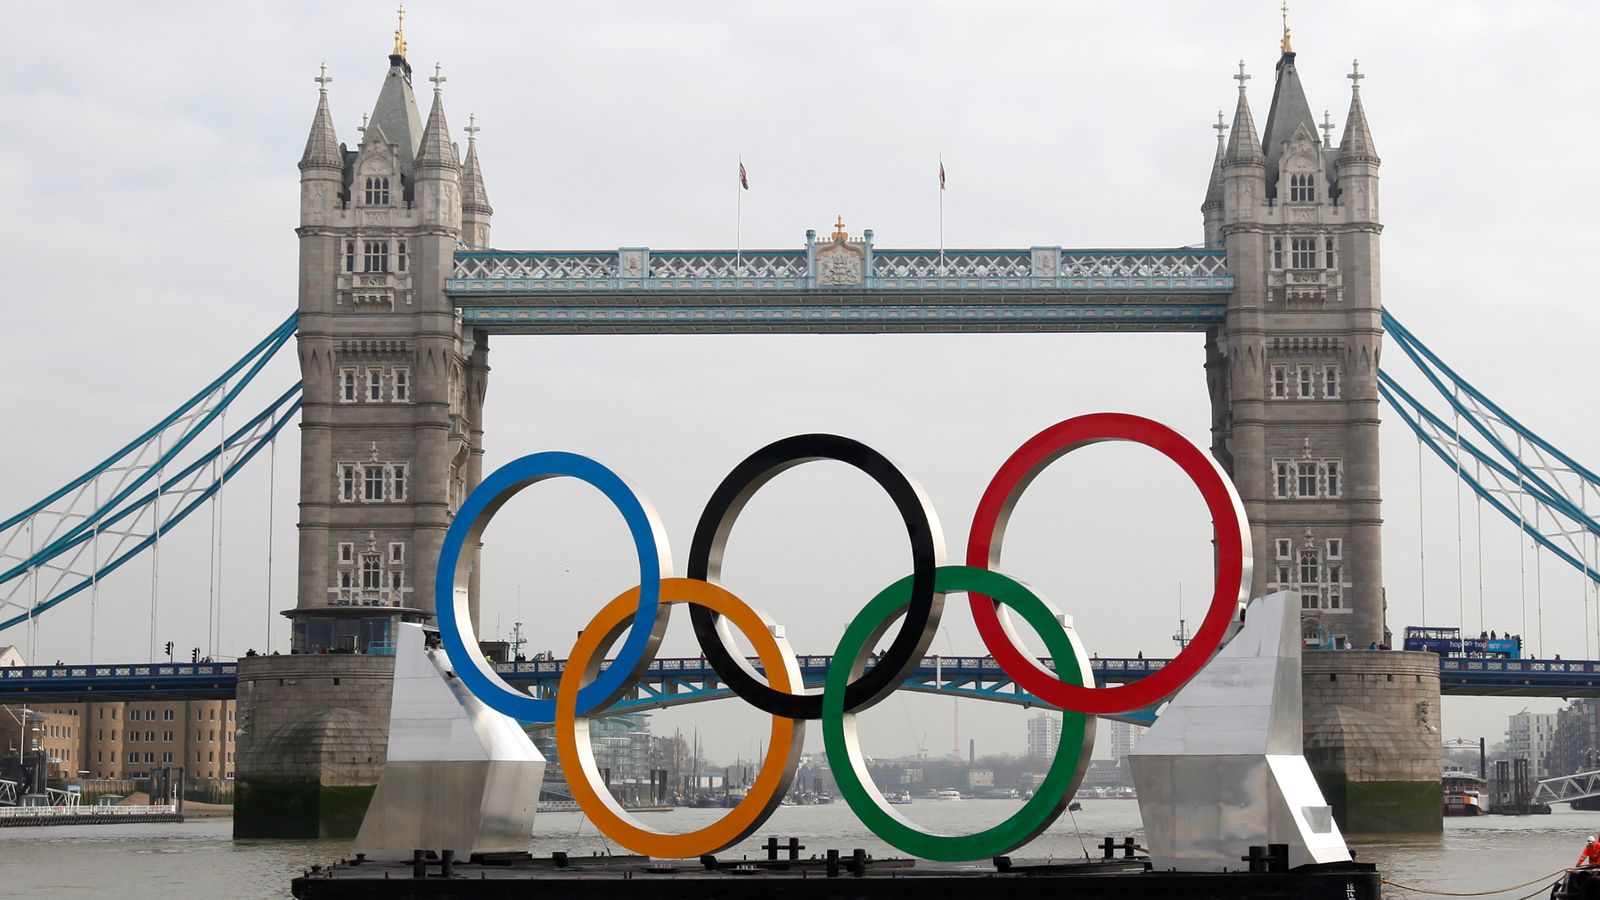 London working on bid to host ‘greenest ever’ Olympics and Paralympics, says Mayor Sadiq Khan